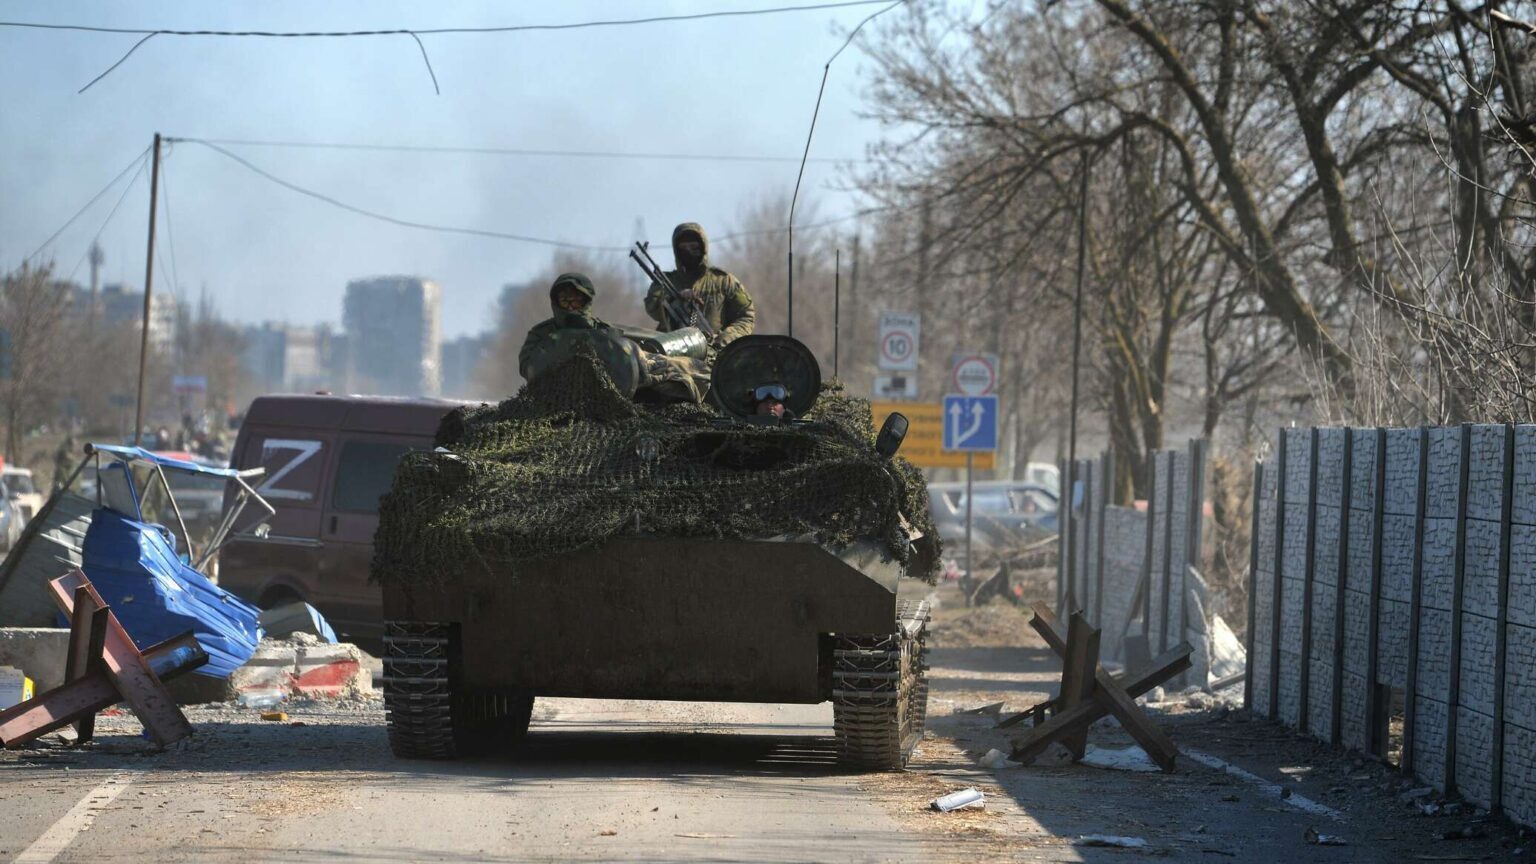 Фото как идет война на украине